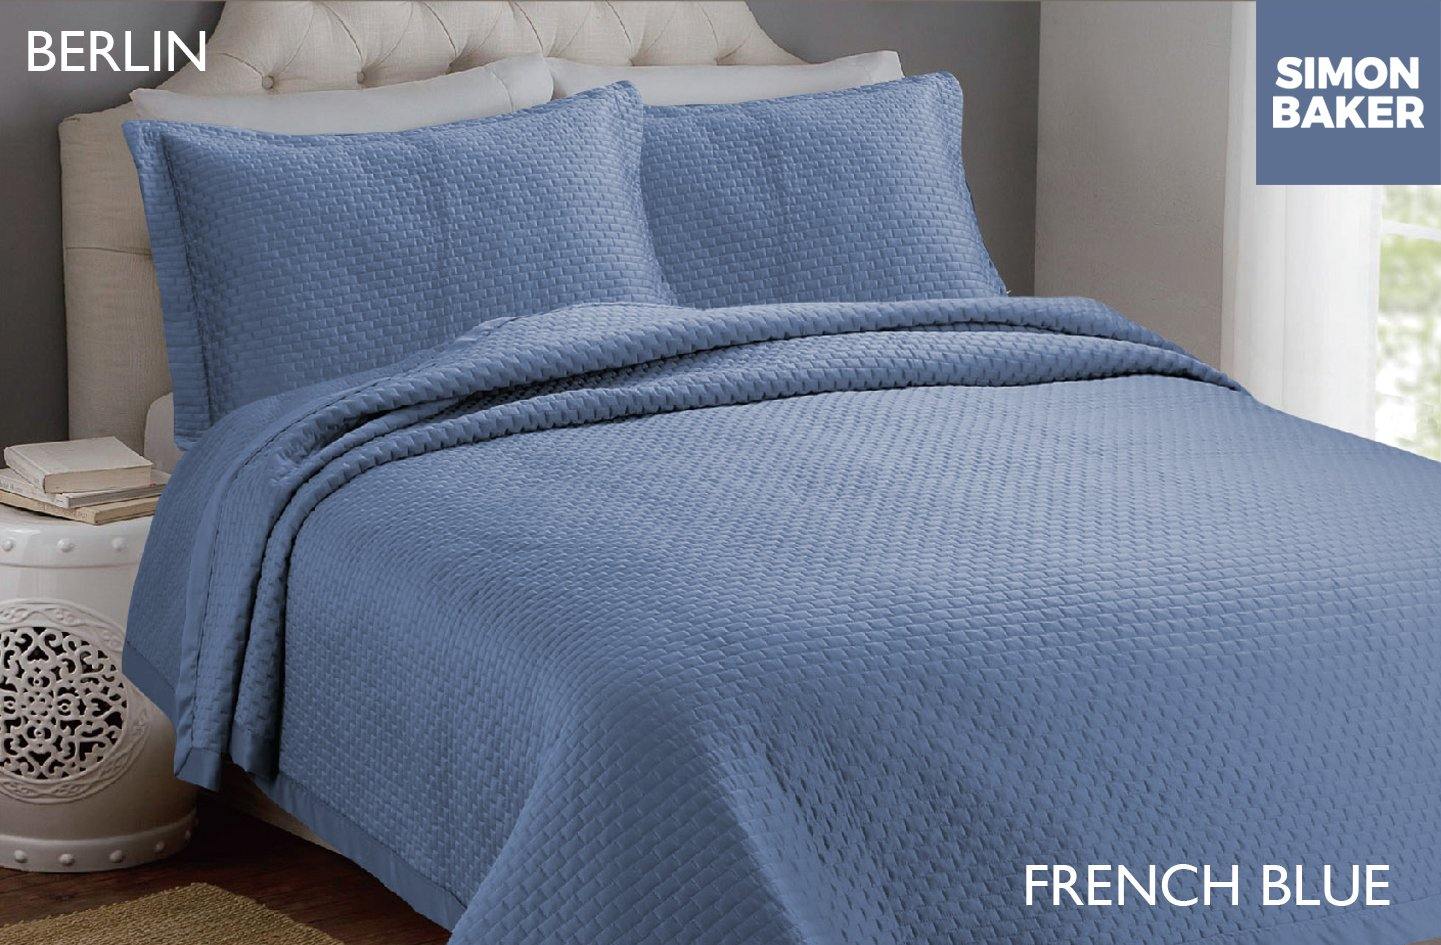 Simon Baker | Berlin Bedspread French Blue (Various Sizes)